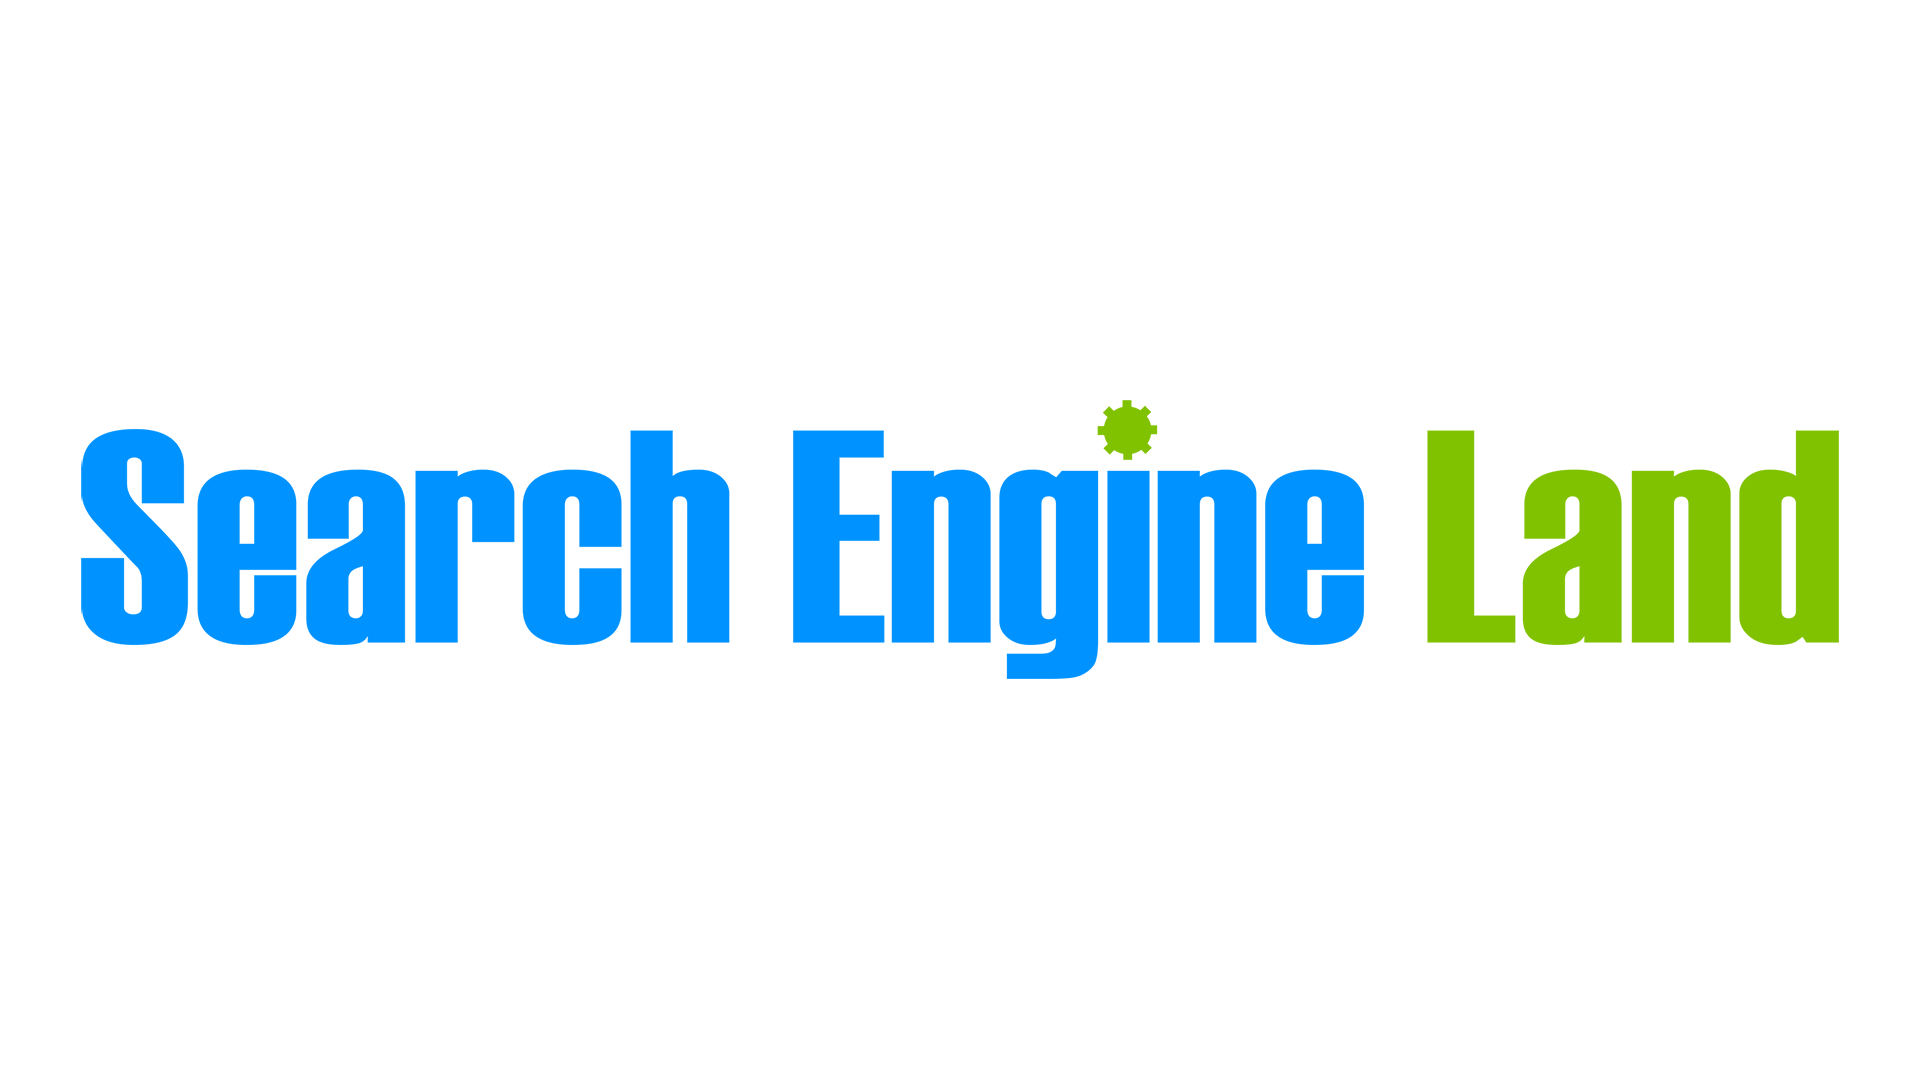 Search Engine Company Logo - Search Engine Land - News On Search Engines, Search Engine ...